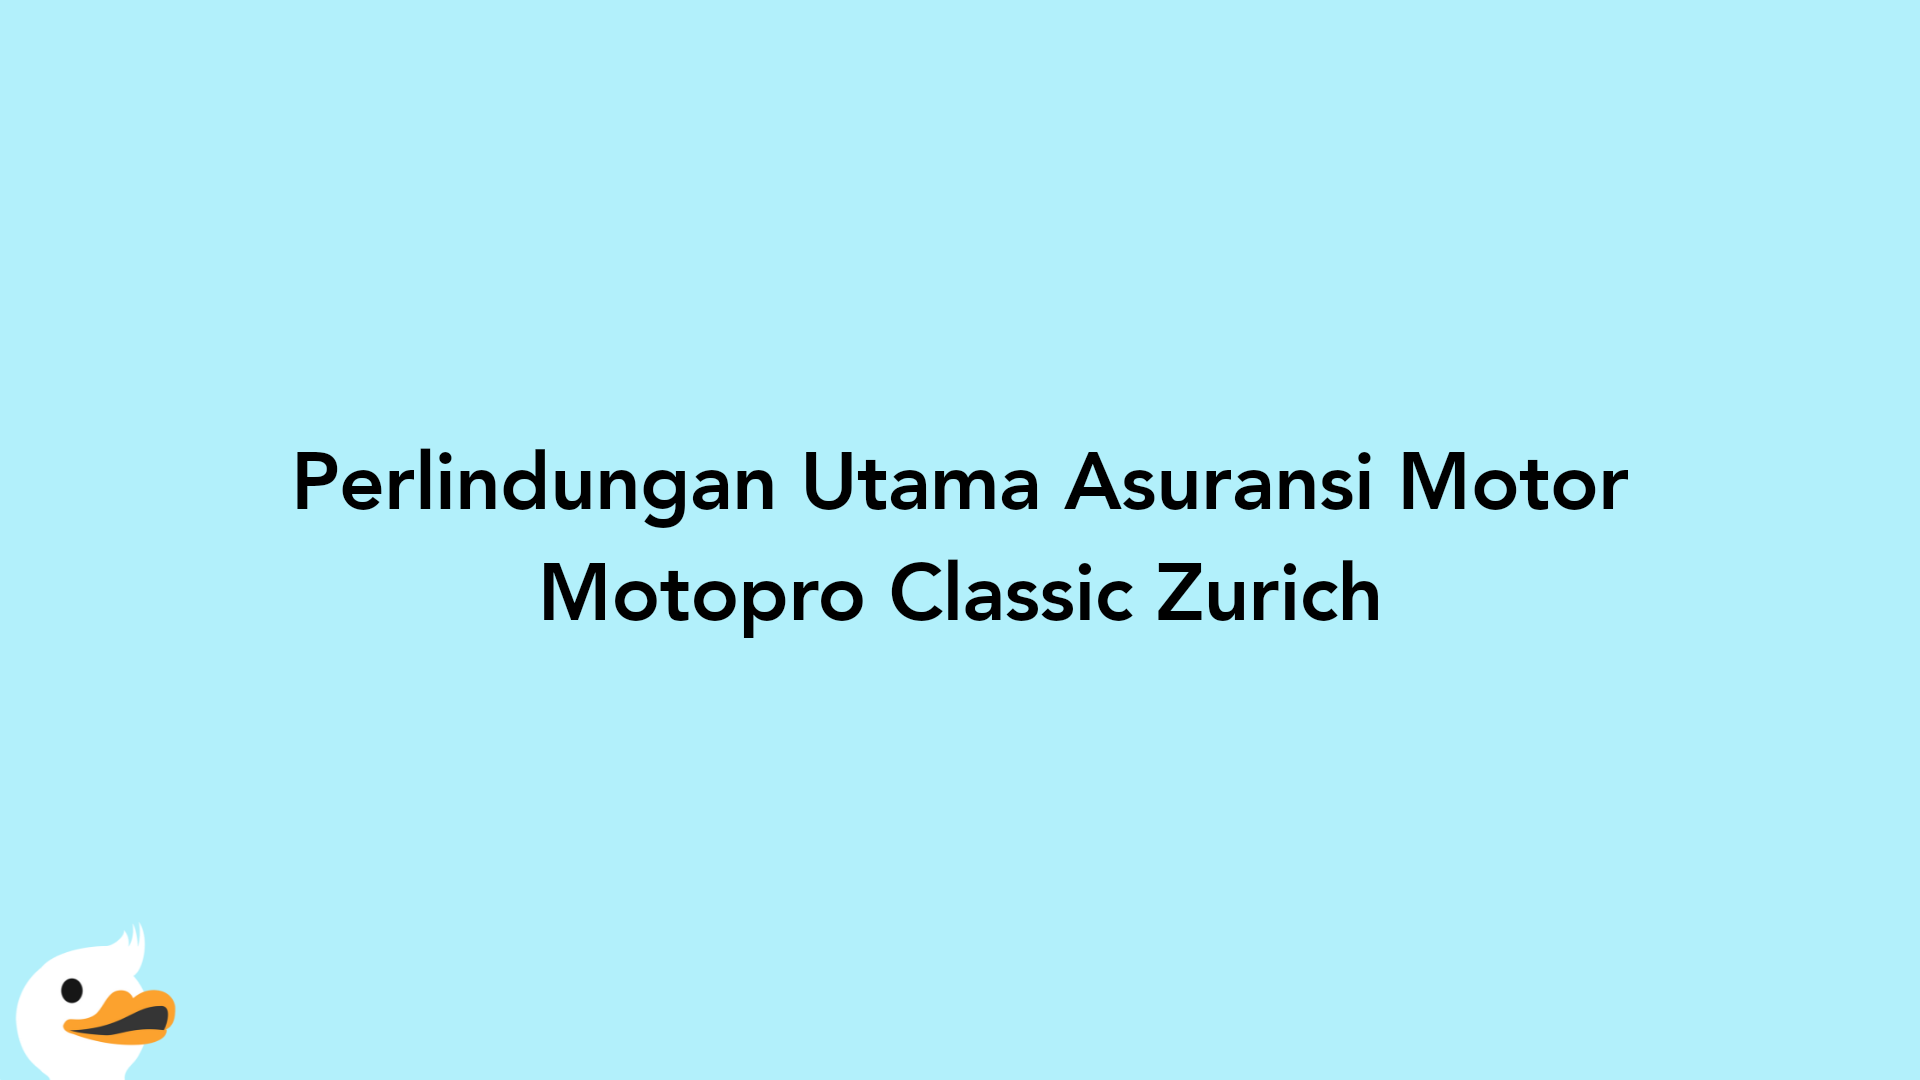 Perlindungan Utama Asuransi Motor Motopro Classic Zurich